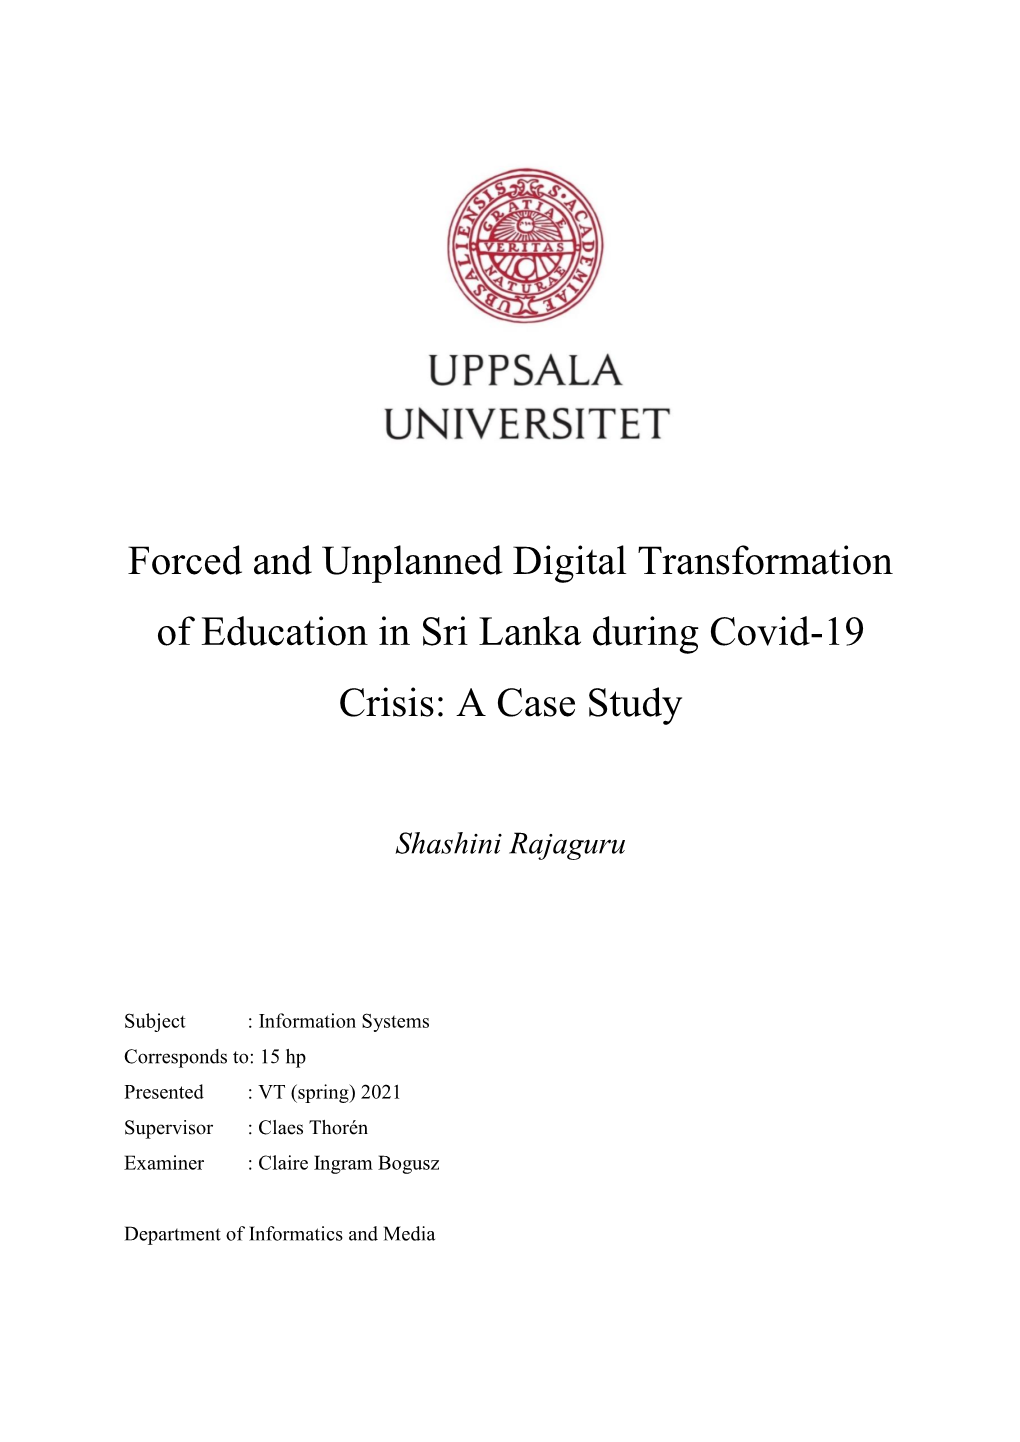 Digital Transformation of Education in Sri Lanka During Covid-19 Crisis: a Case Study